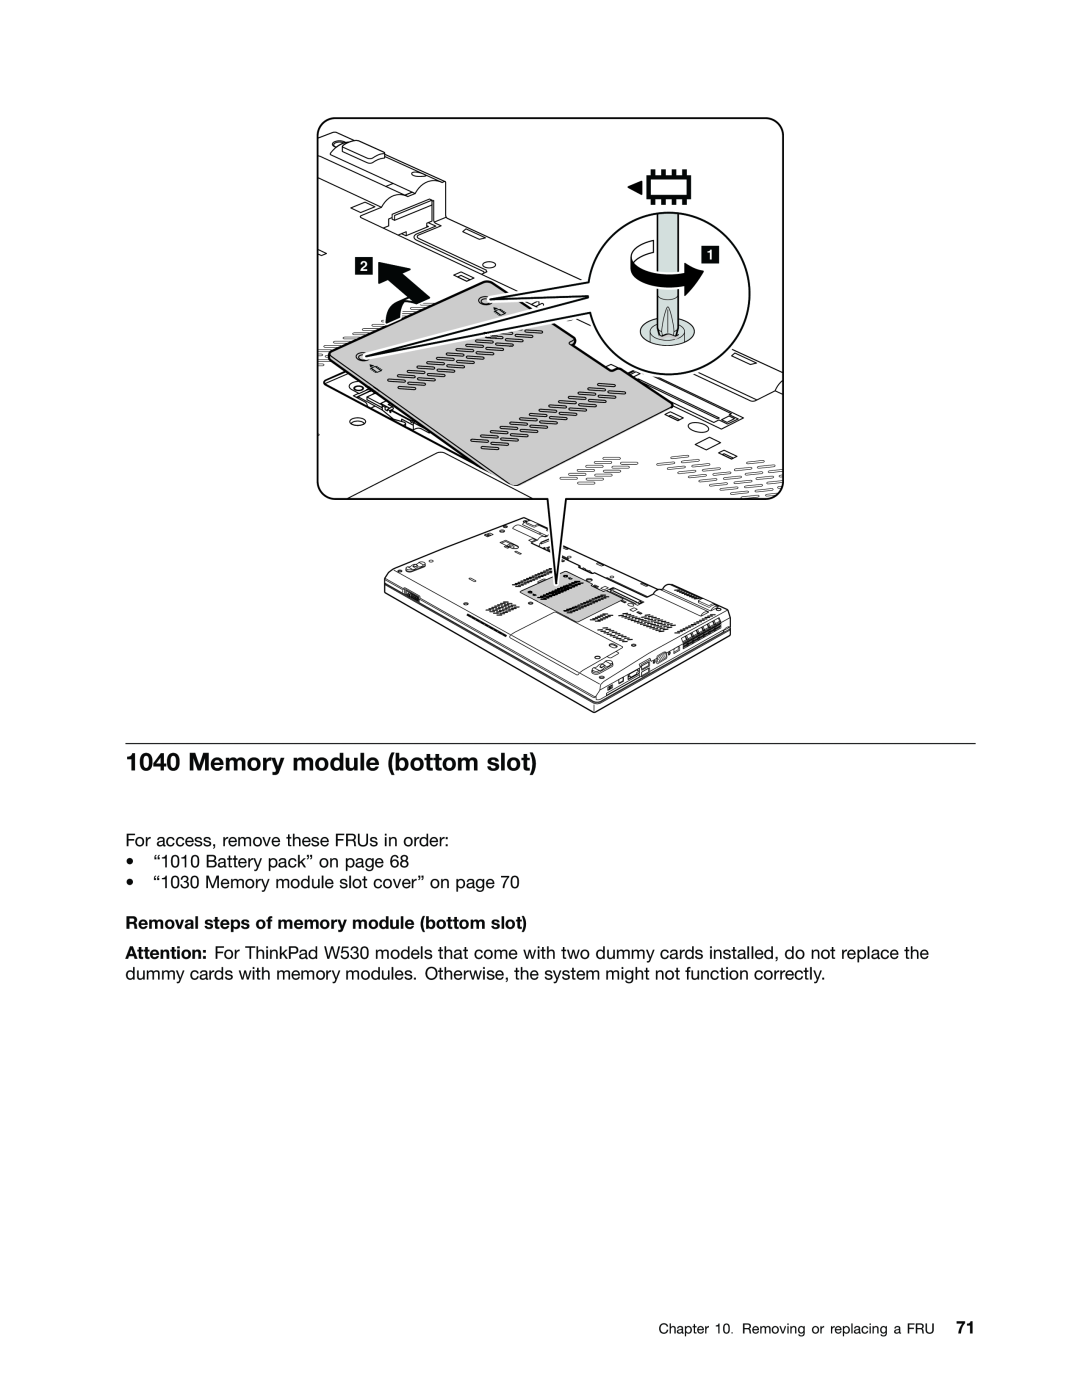 Lenovo W530, T530i Memory module bottom slot, Removal steps of memory module bottom slot, Removing or replacing a FRU 